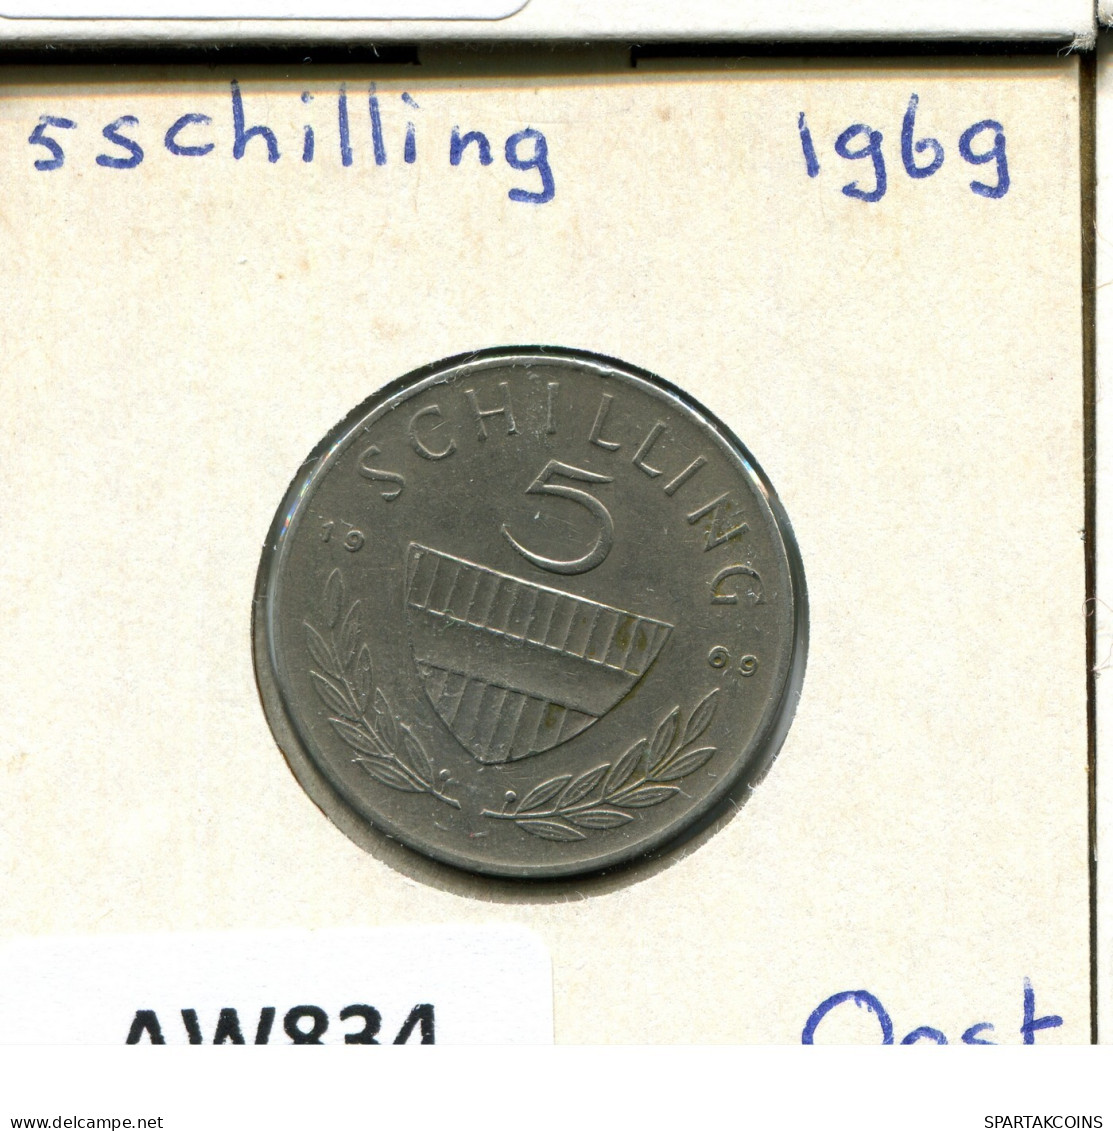 5 SCHILLING 1969 AUSTRIA Coin #AW834.U.A - Autriche